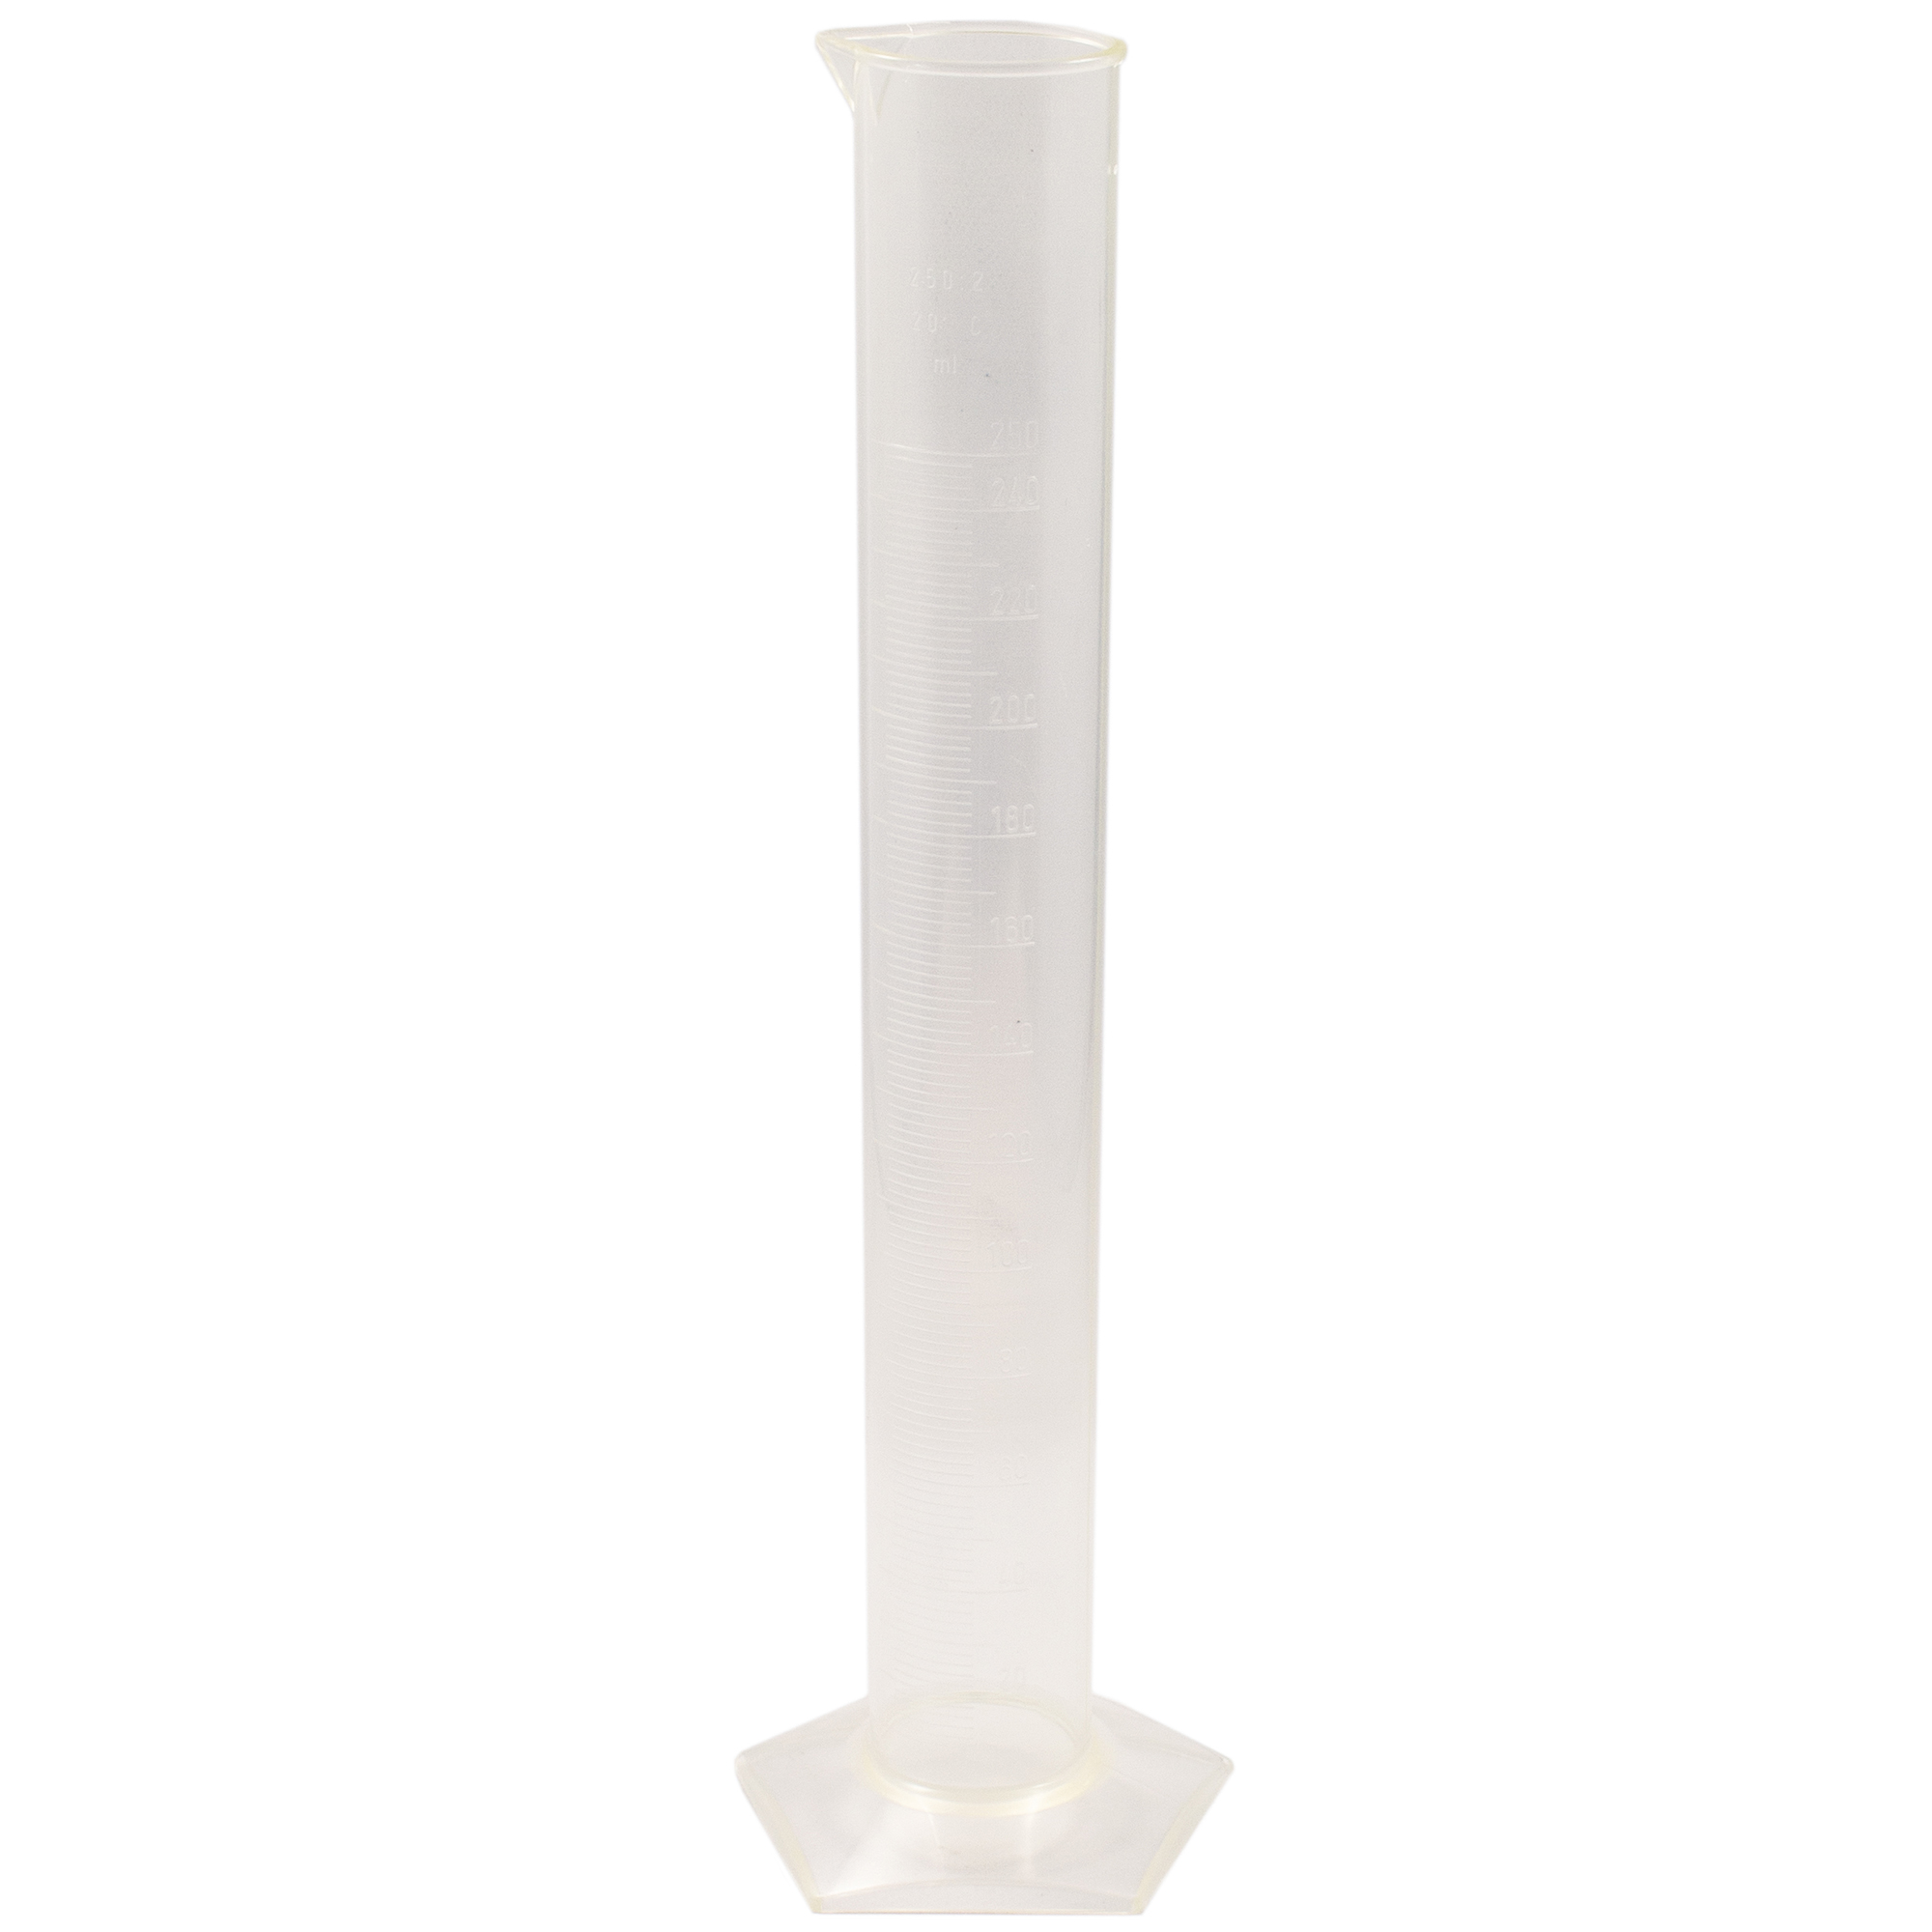 Measuring cylinder plastic (tpx) - 10ml